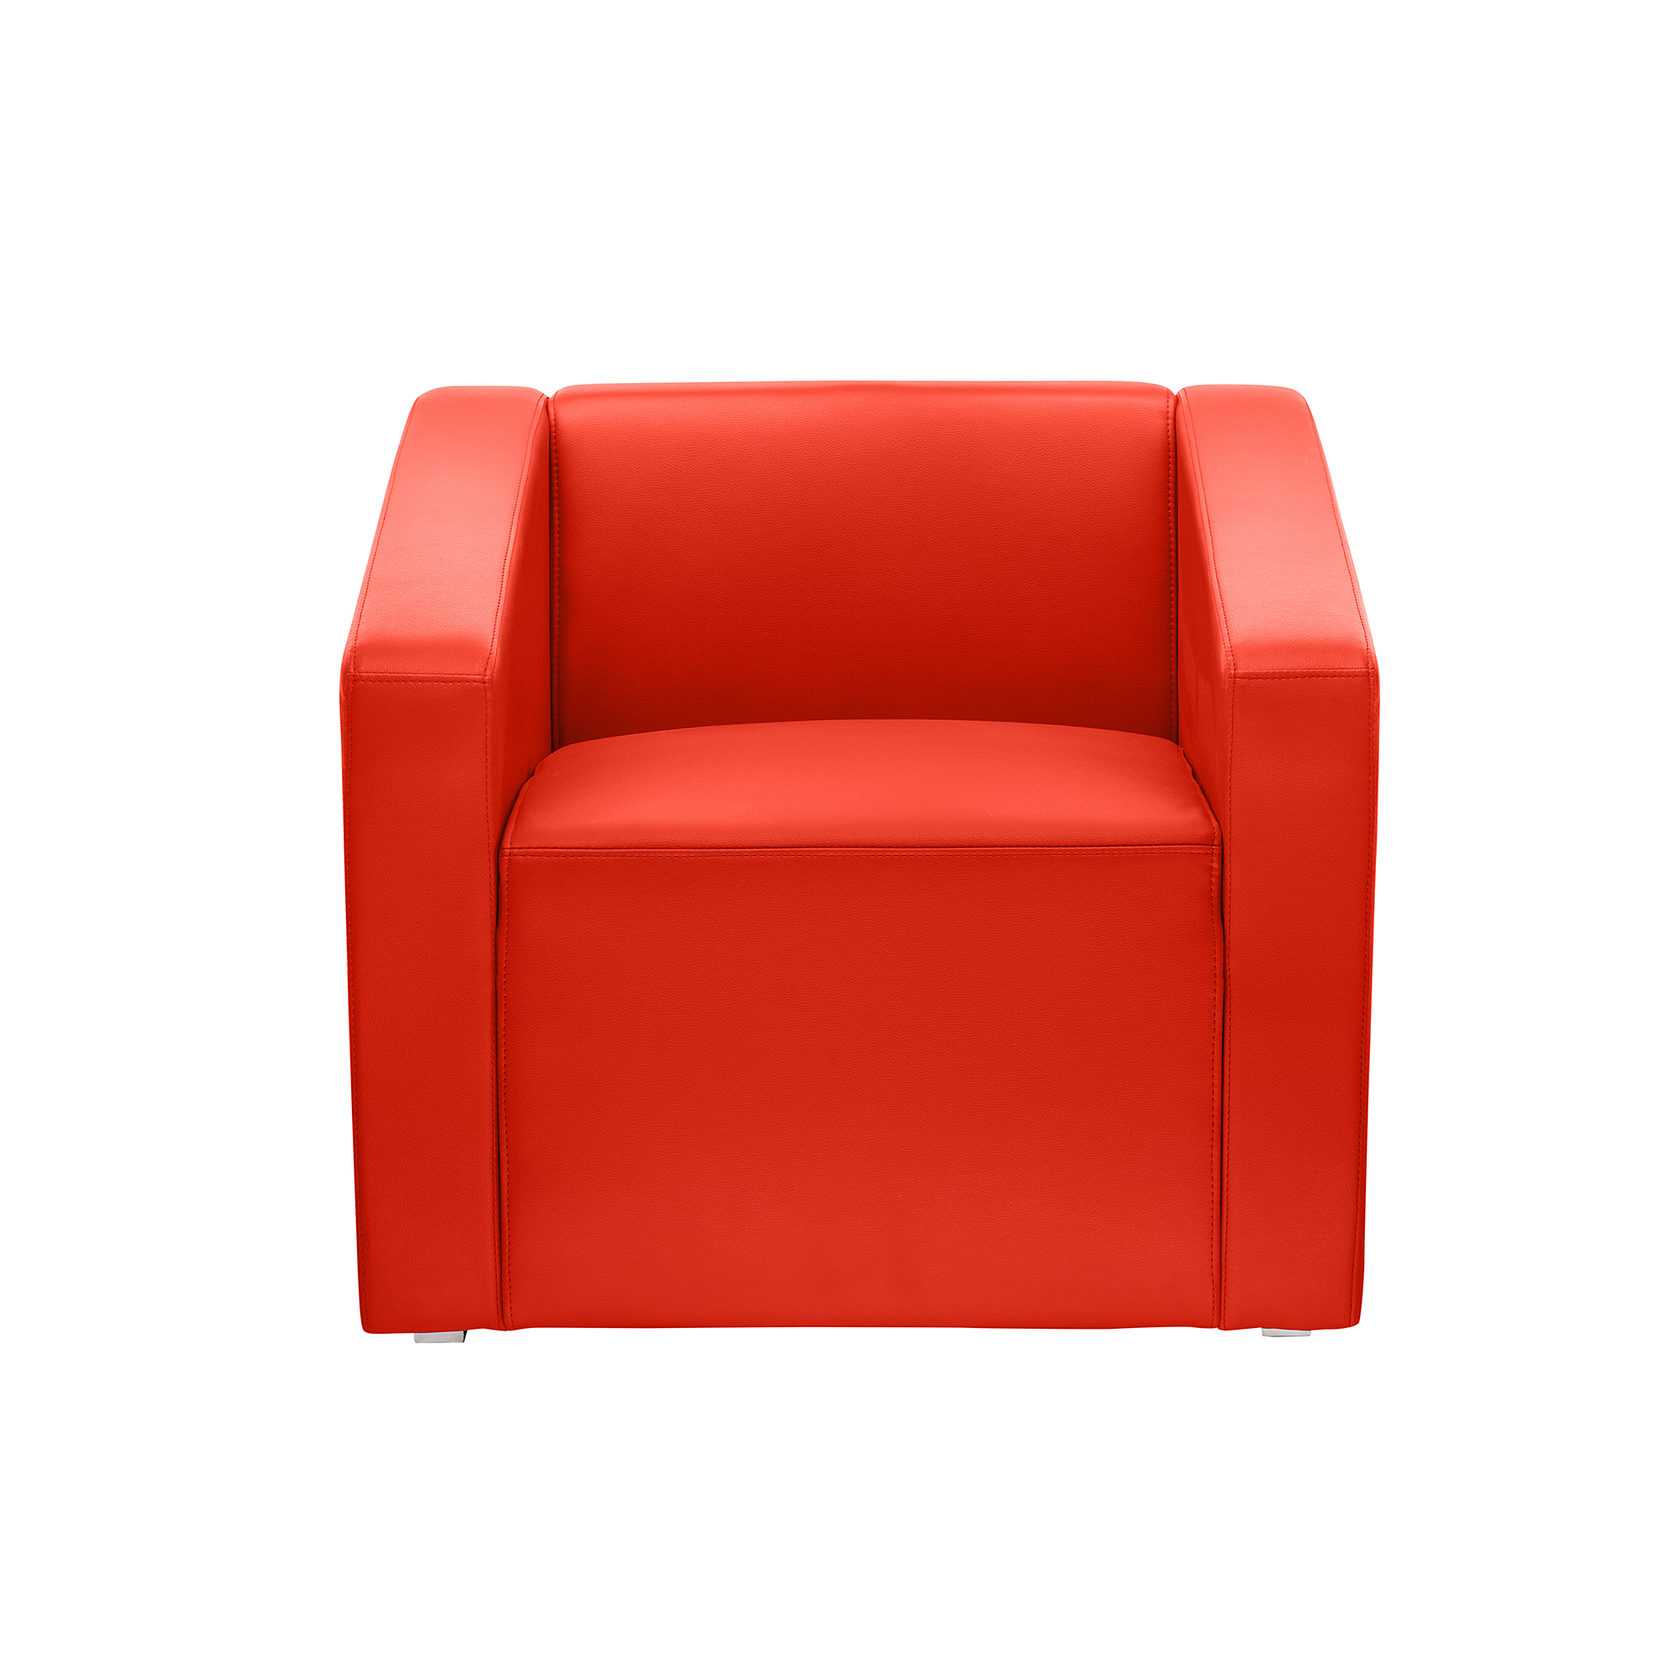 Мягкие кресла магазин. Red Square кресло. Кресло икеа красное. Red Square стул.